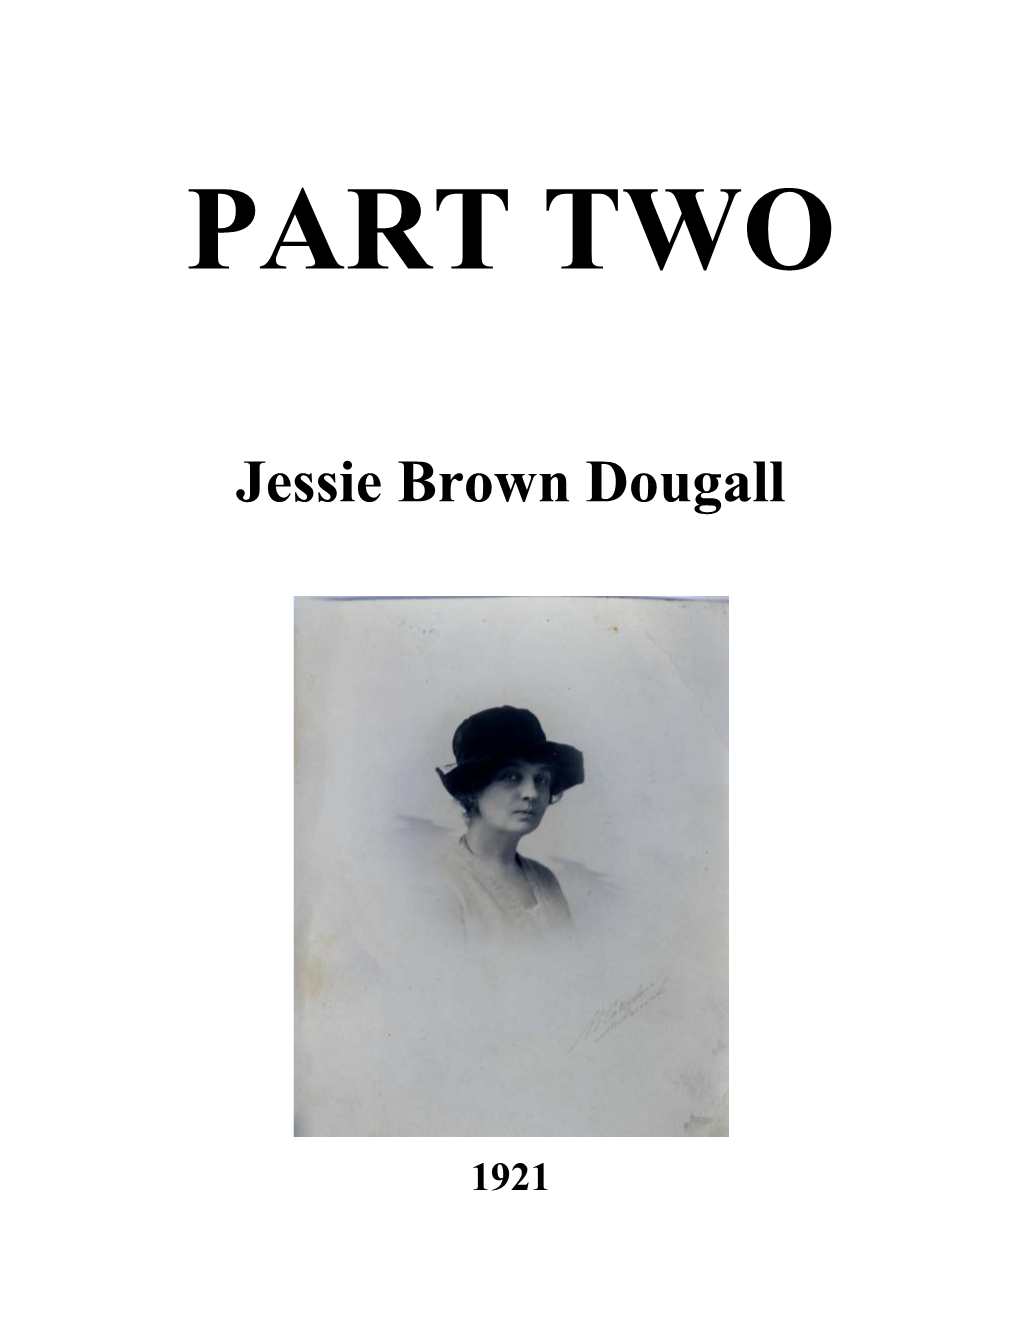 Jessie Brown Dougall